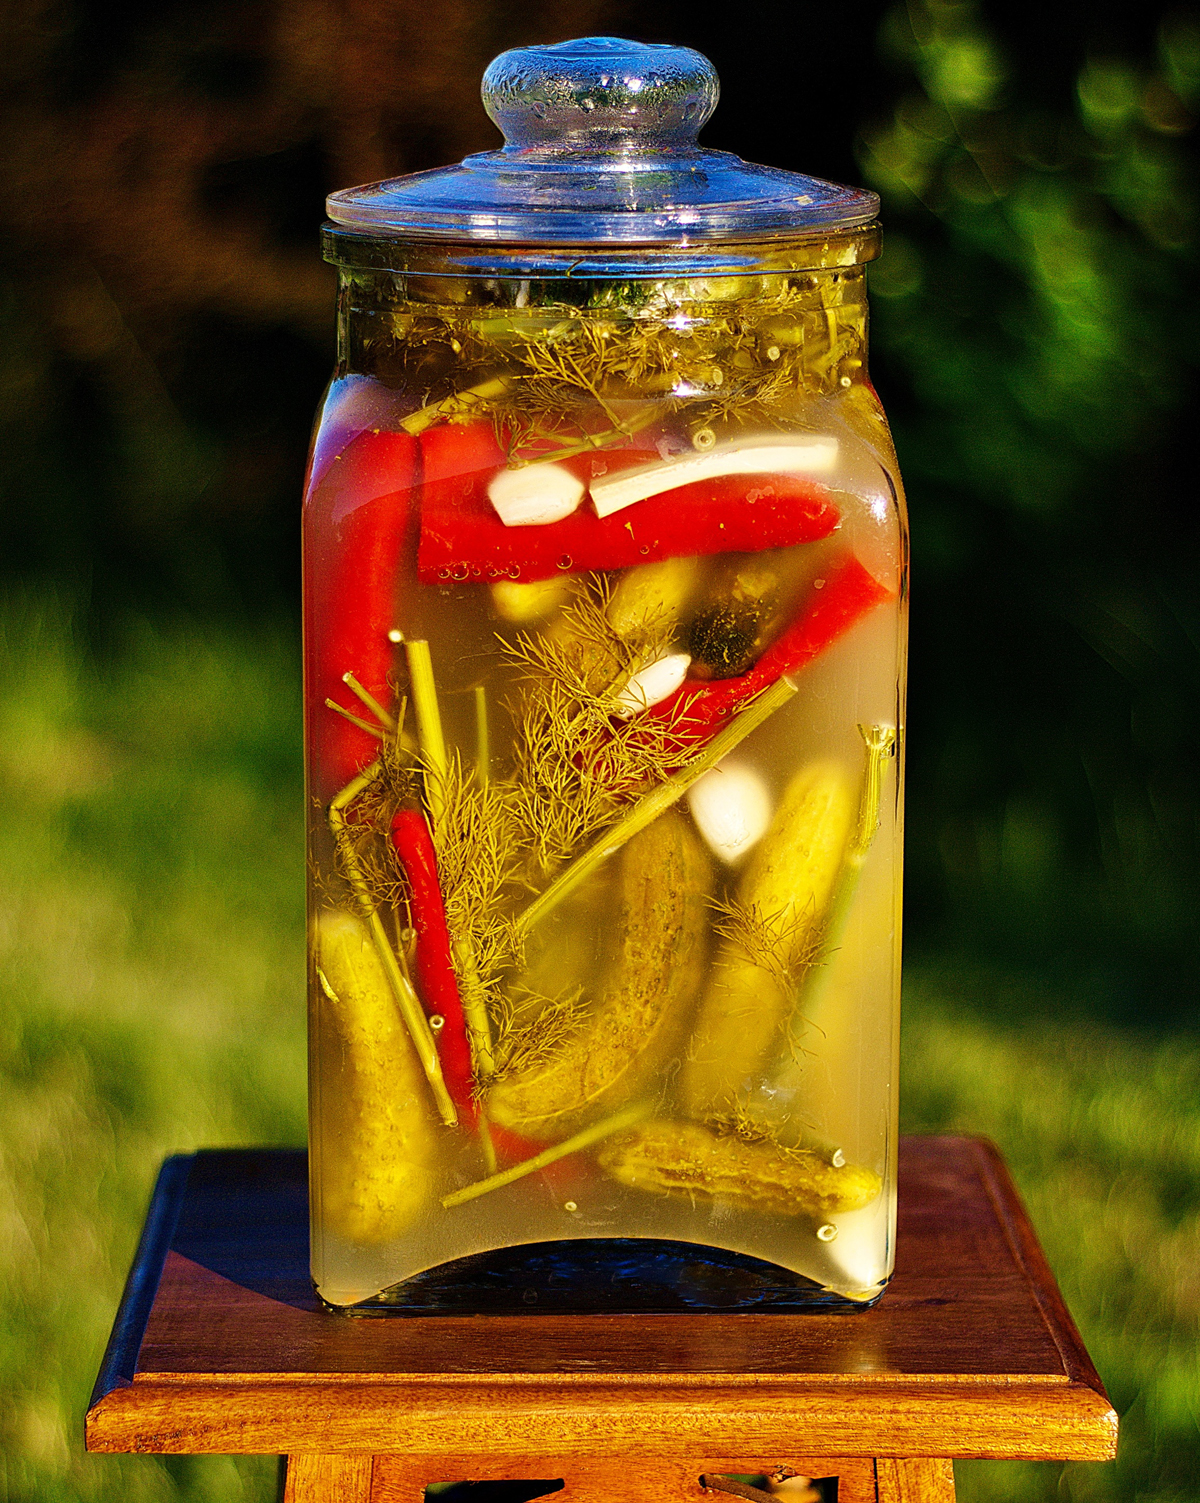 Recipe for Homemade Hot Garlic Dill Pickles